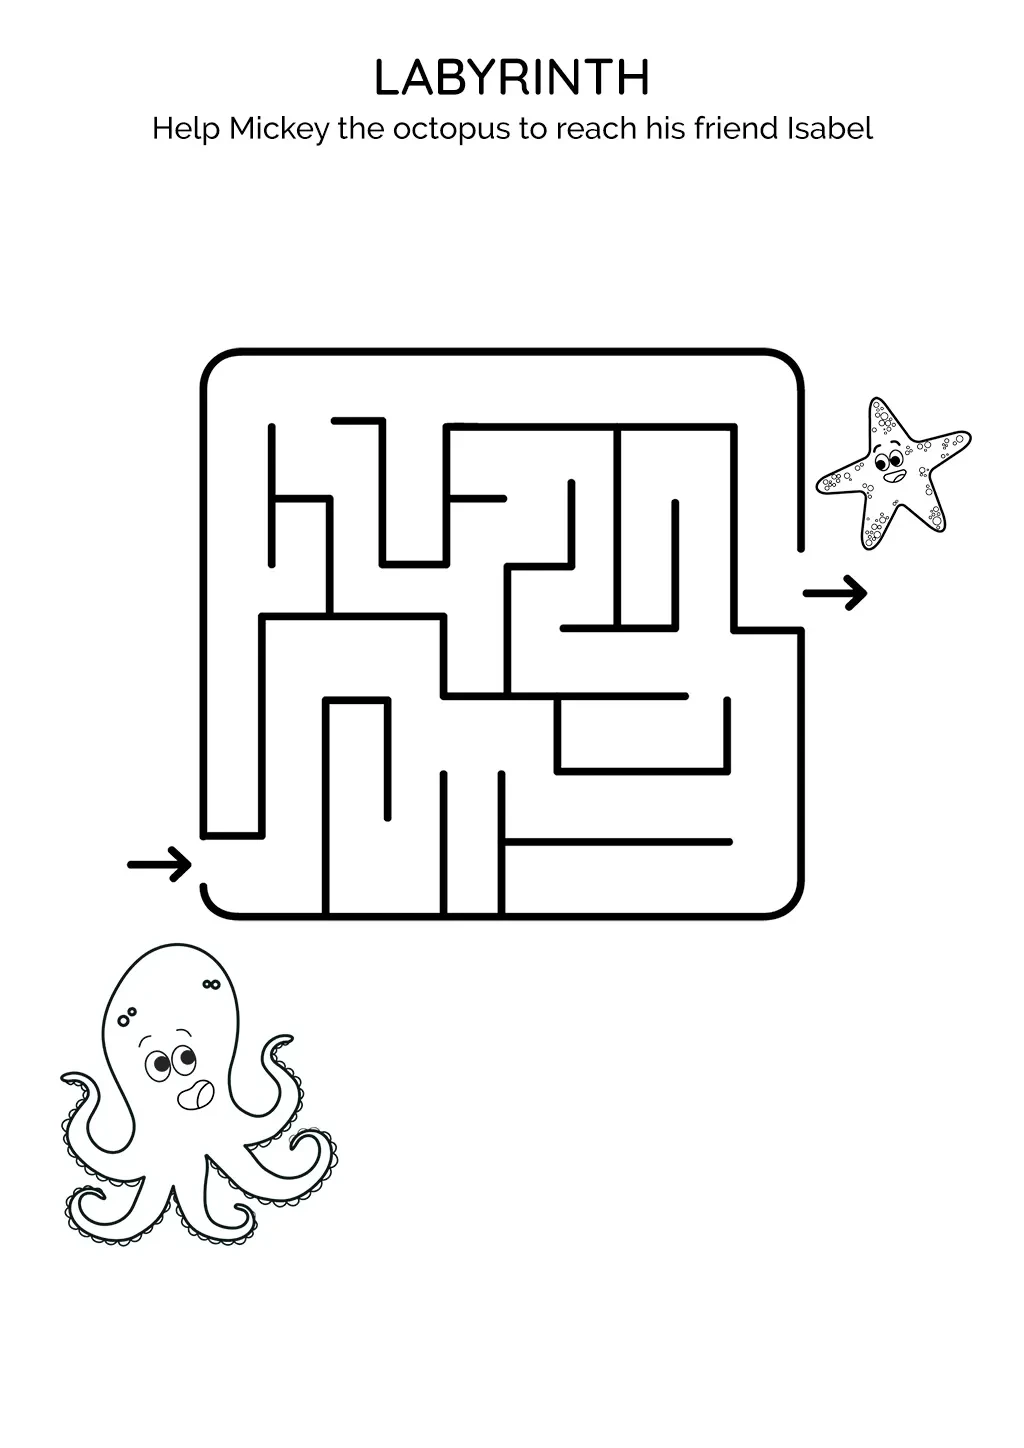 visuospatial_labyrinth_03_EN_web-1